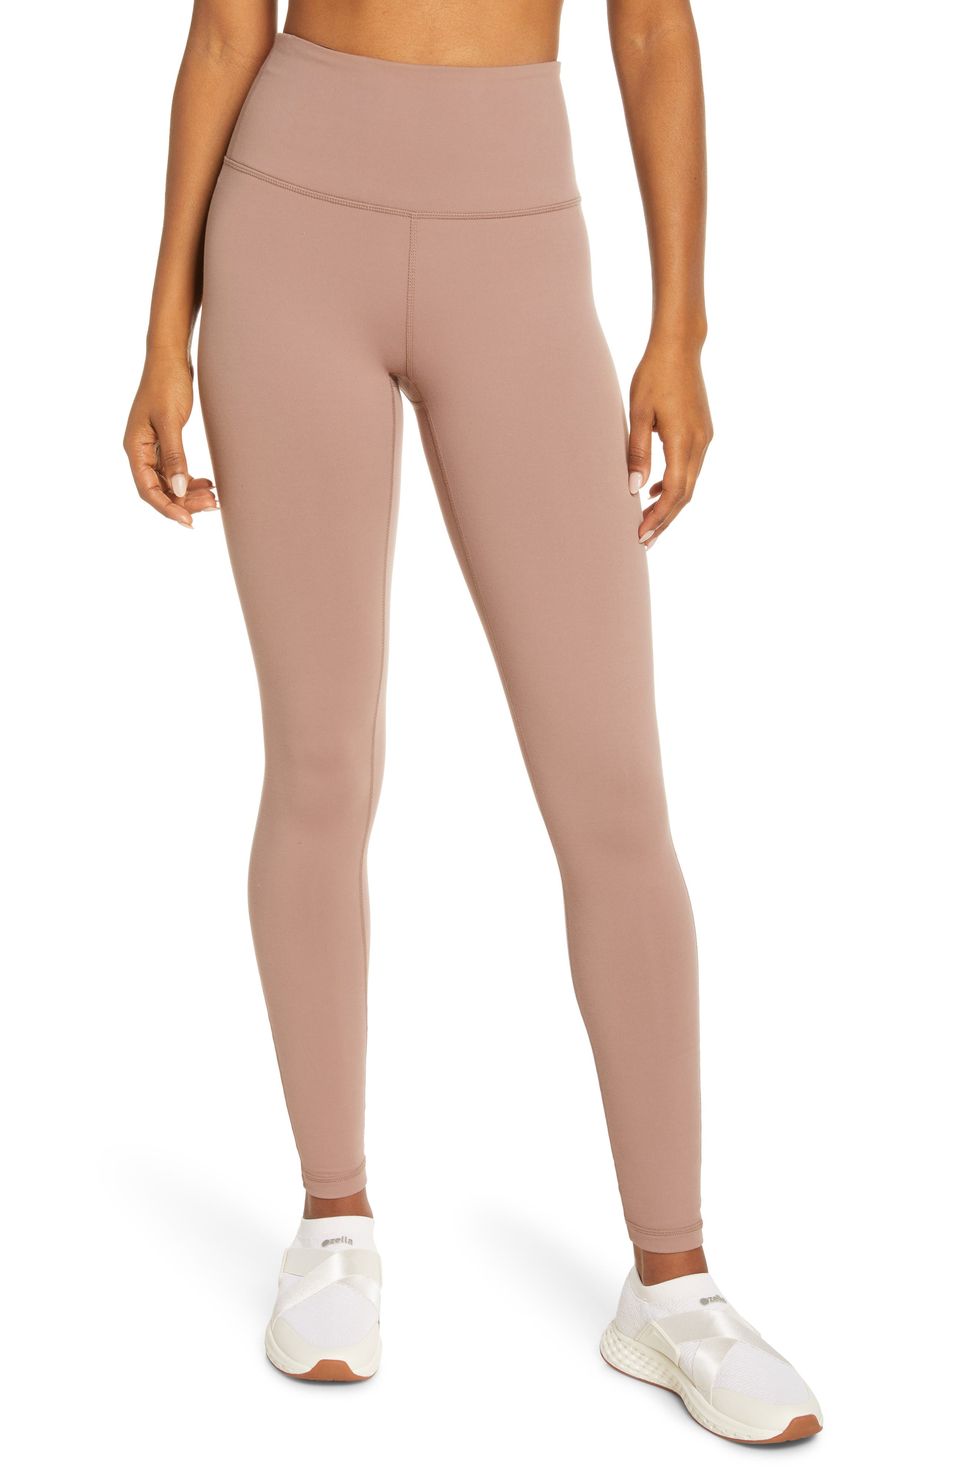 IUGA High Waist Wide Leg Yoga Pants for Women - Khaki / S